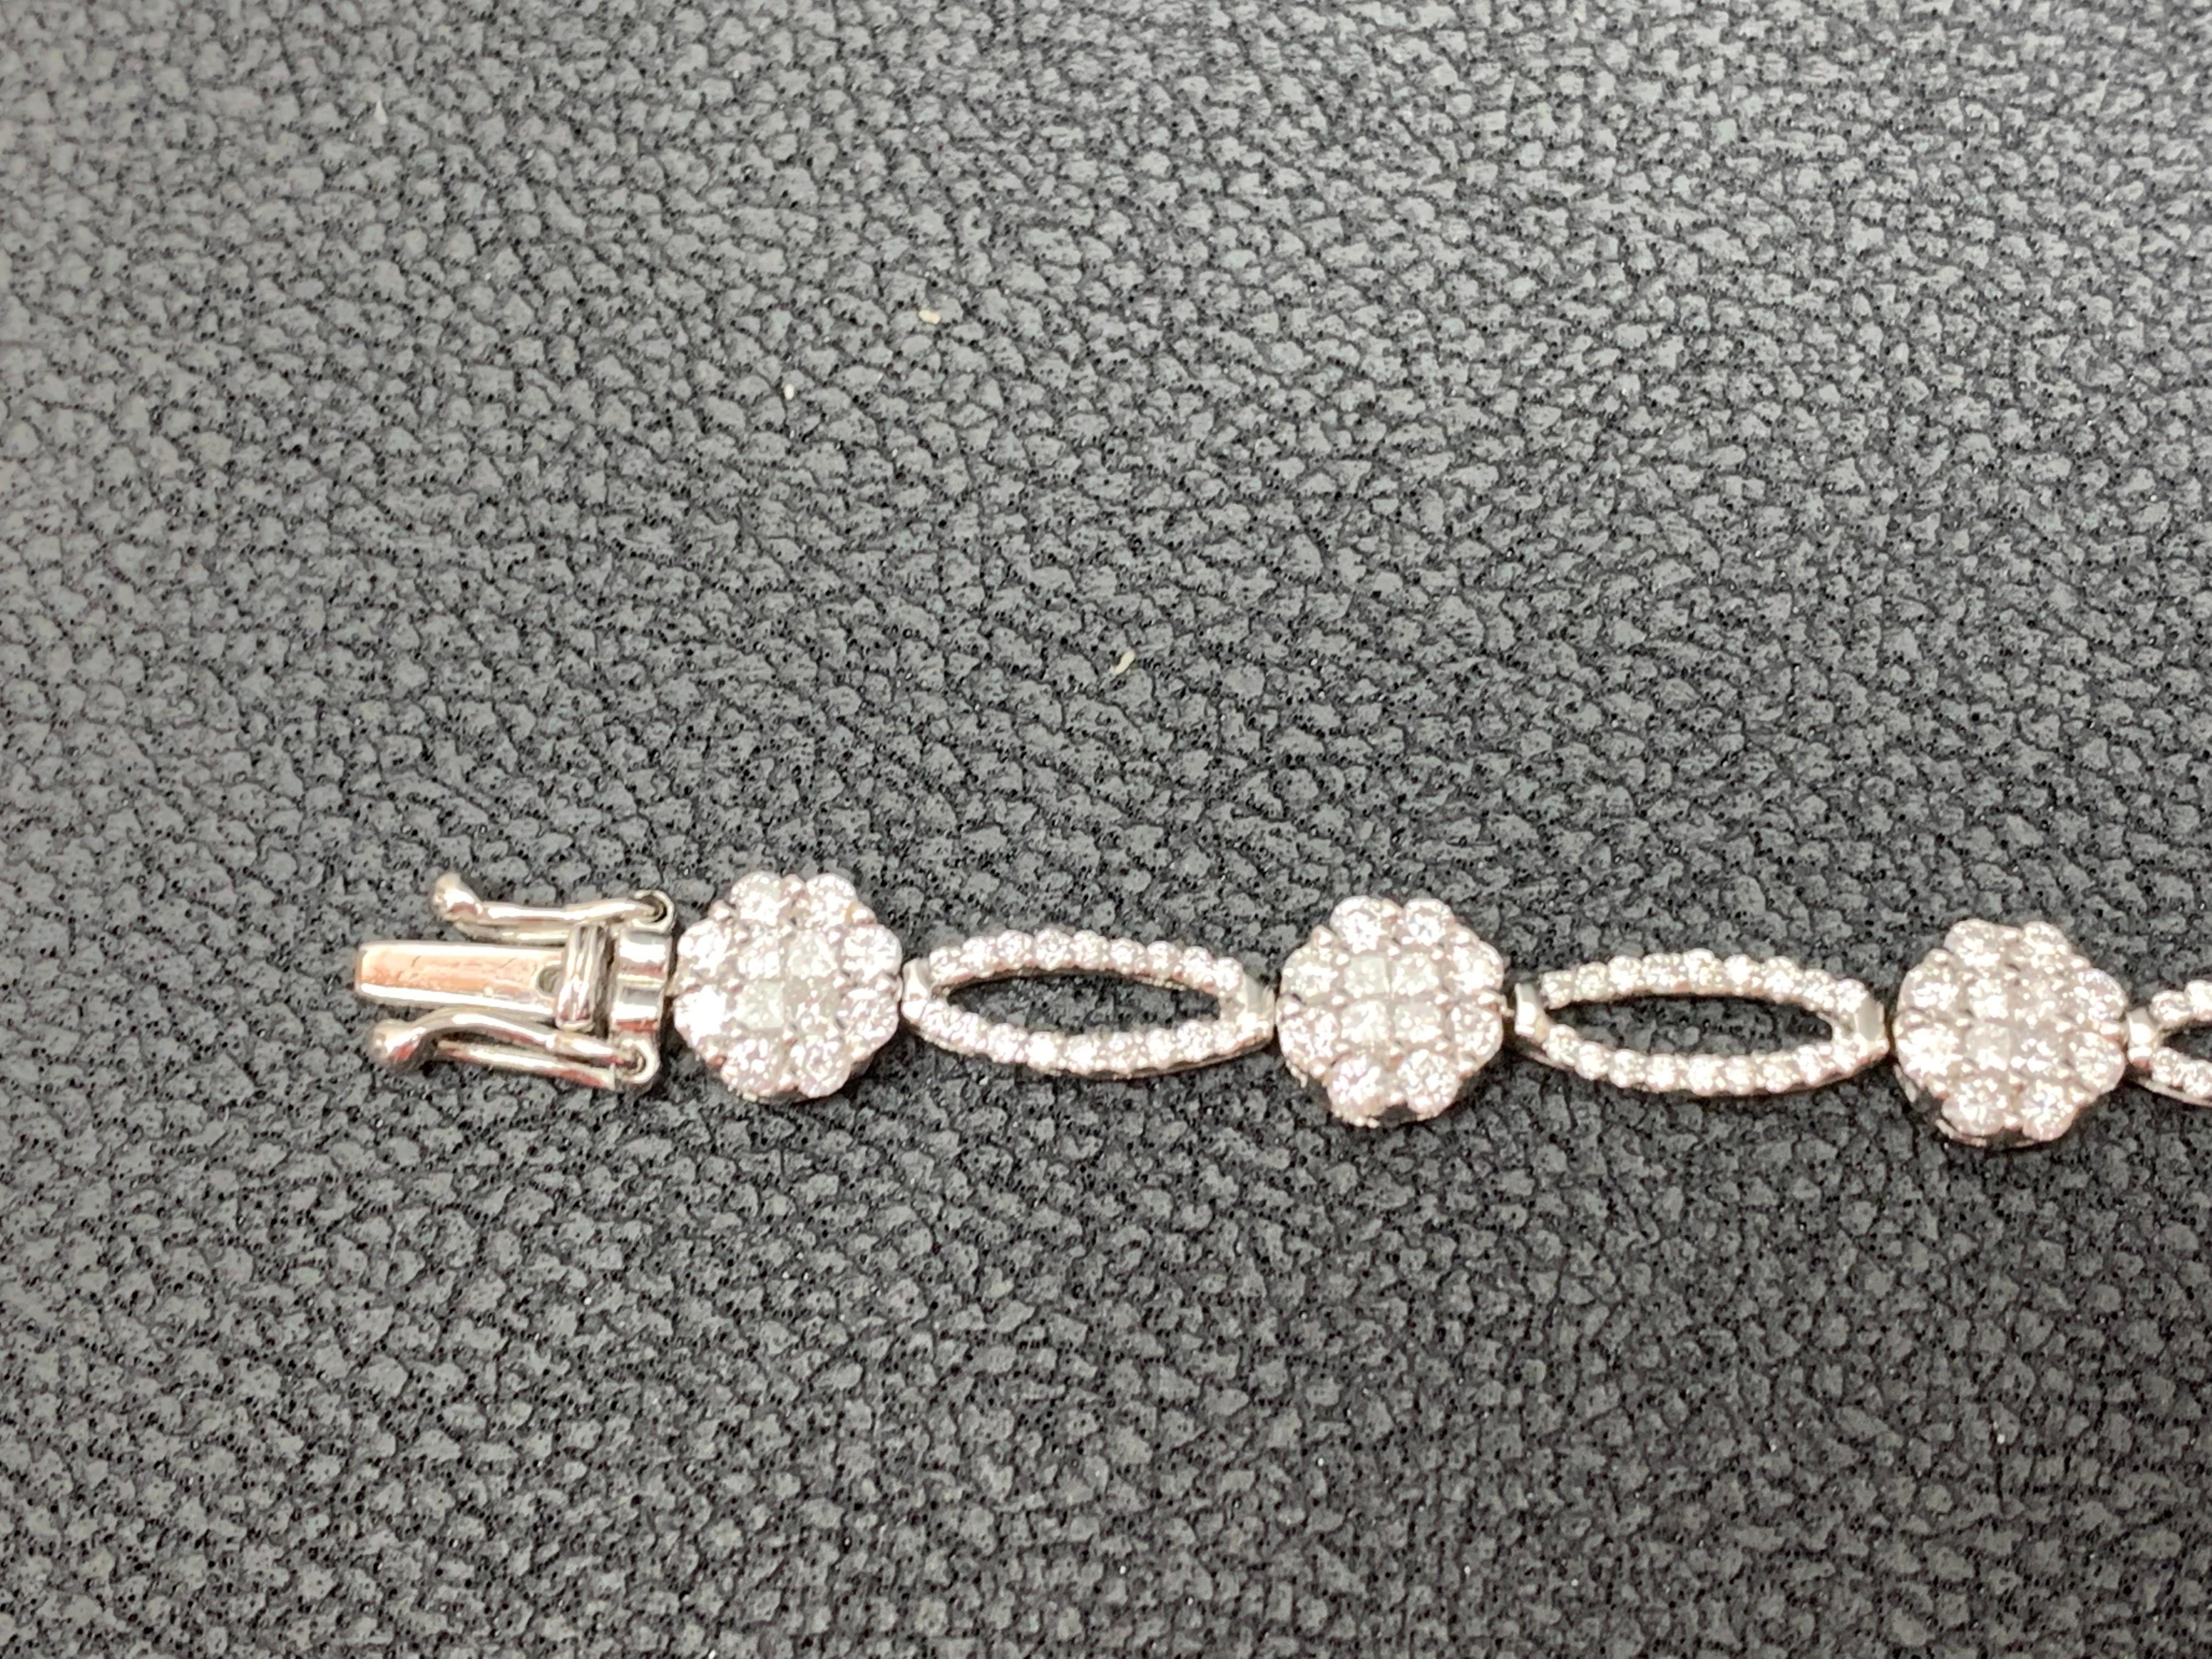 Open-Work 2.39 Carat Diamond Bracelet in 14K White Gold Art Deco Bracelet For Sale 1